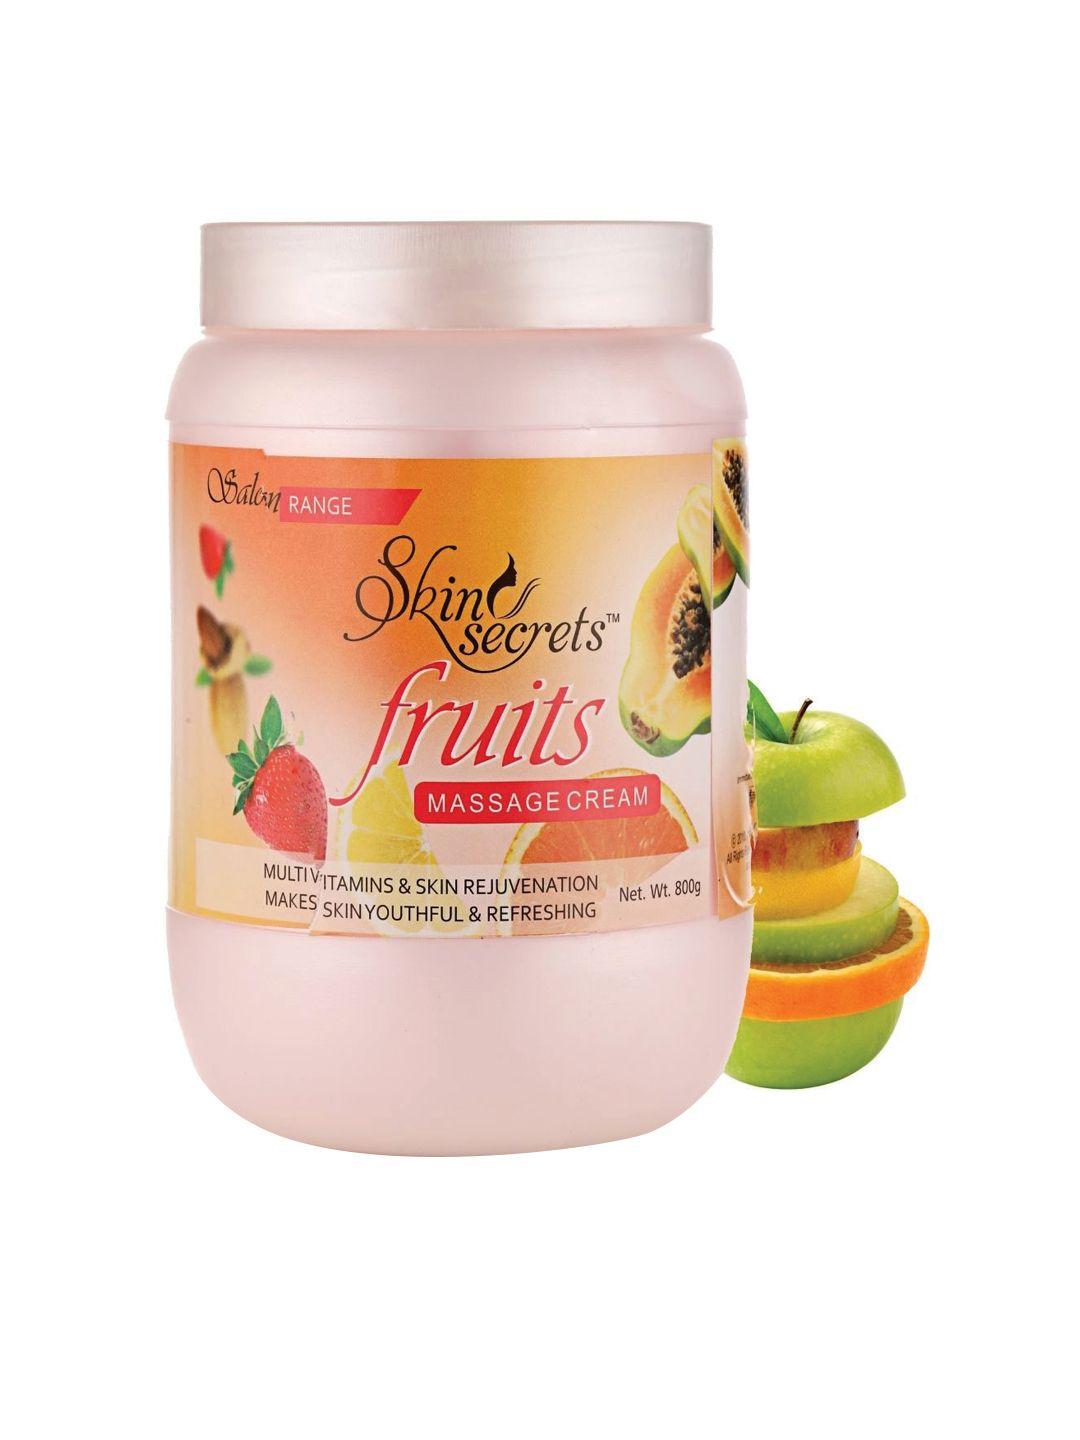 skin secrets cruelty-free fruits massage cream for skin rejuvenation - 800 g